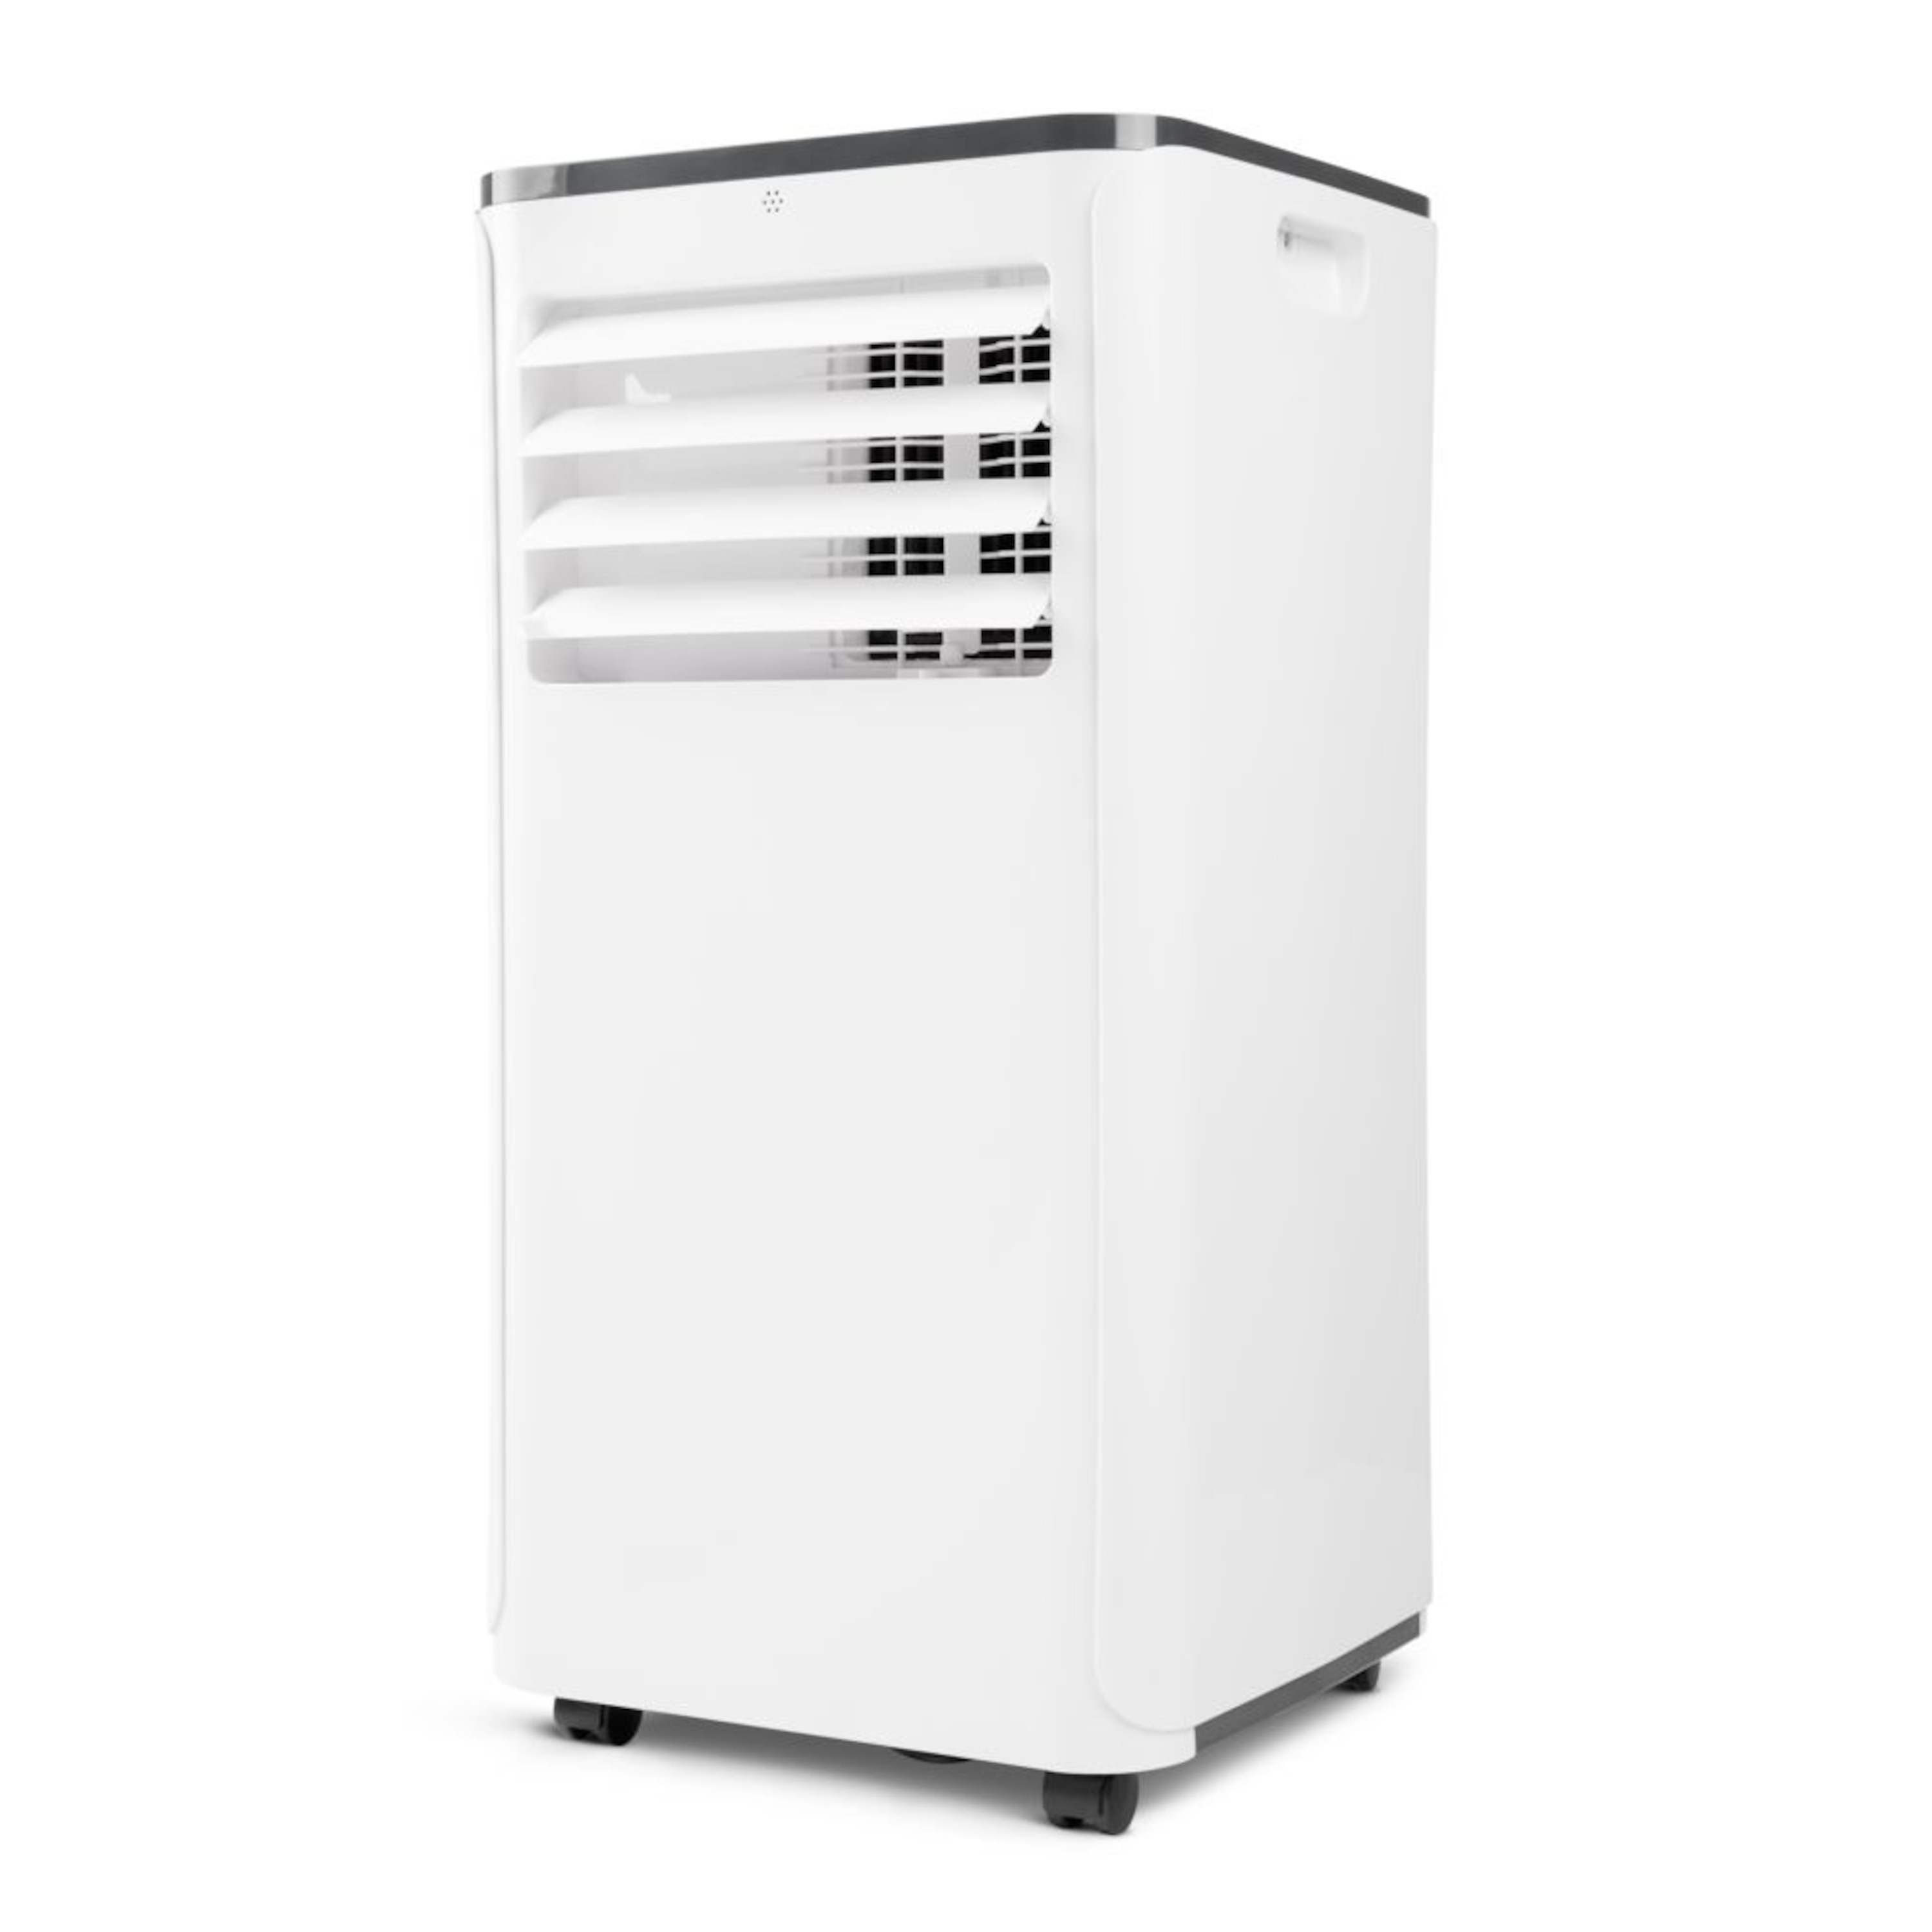 Mobiele airconditioner met afstandsbediening MD 18858 | slaapstand | ontvochtigingsstand | ventilatiestand | 24-uurs timer